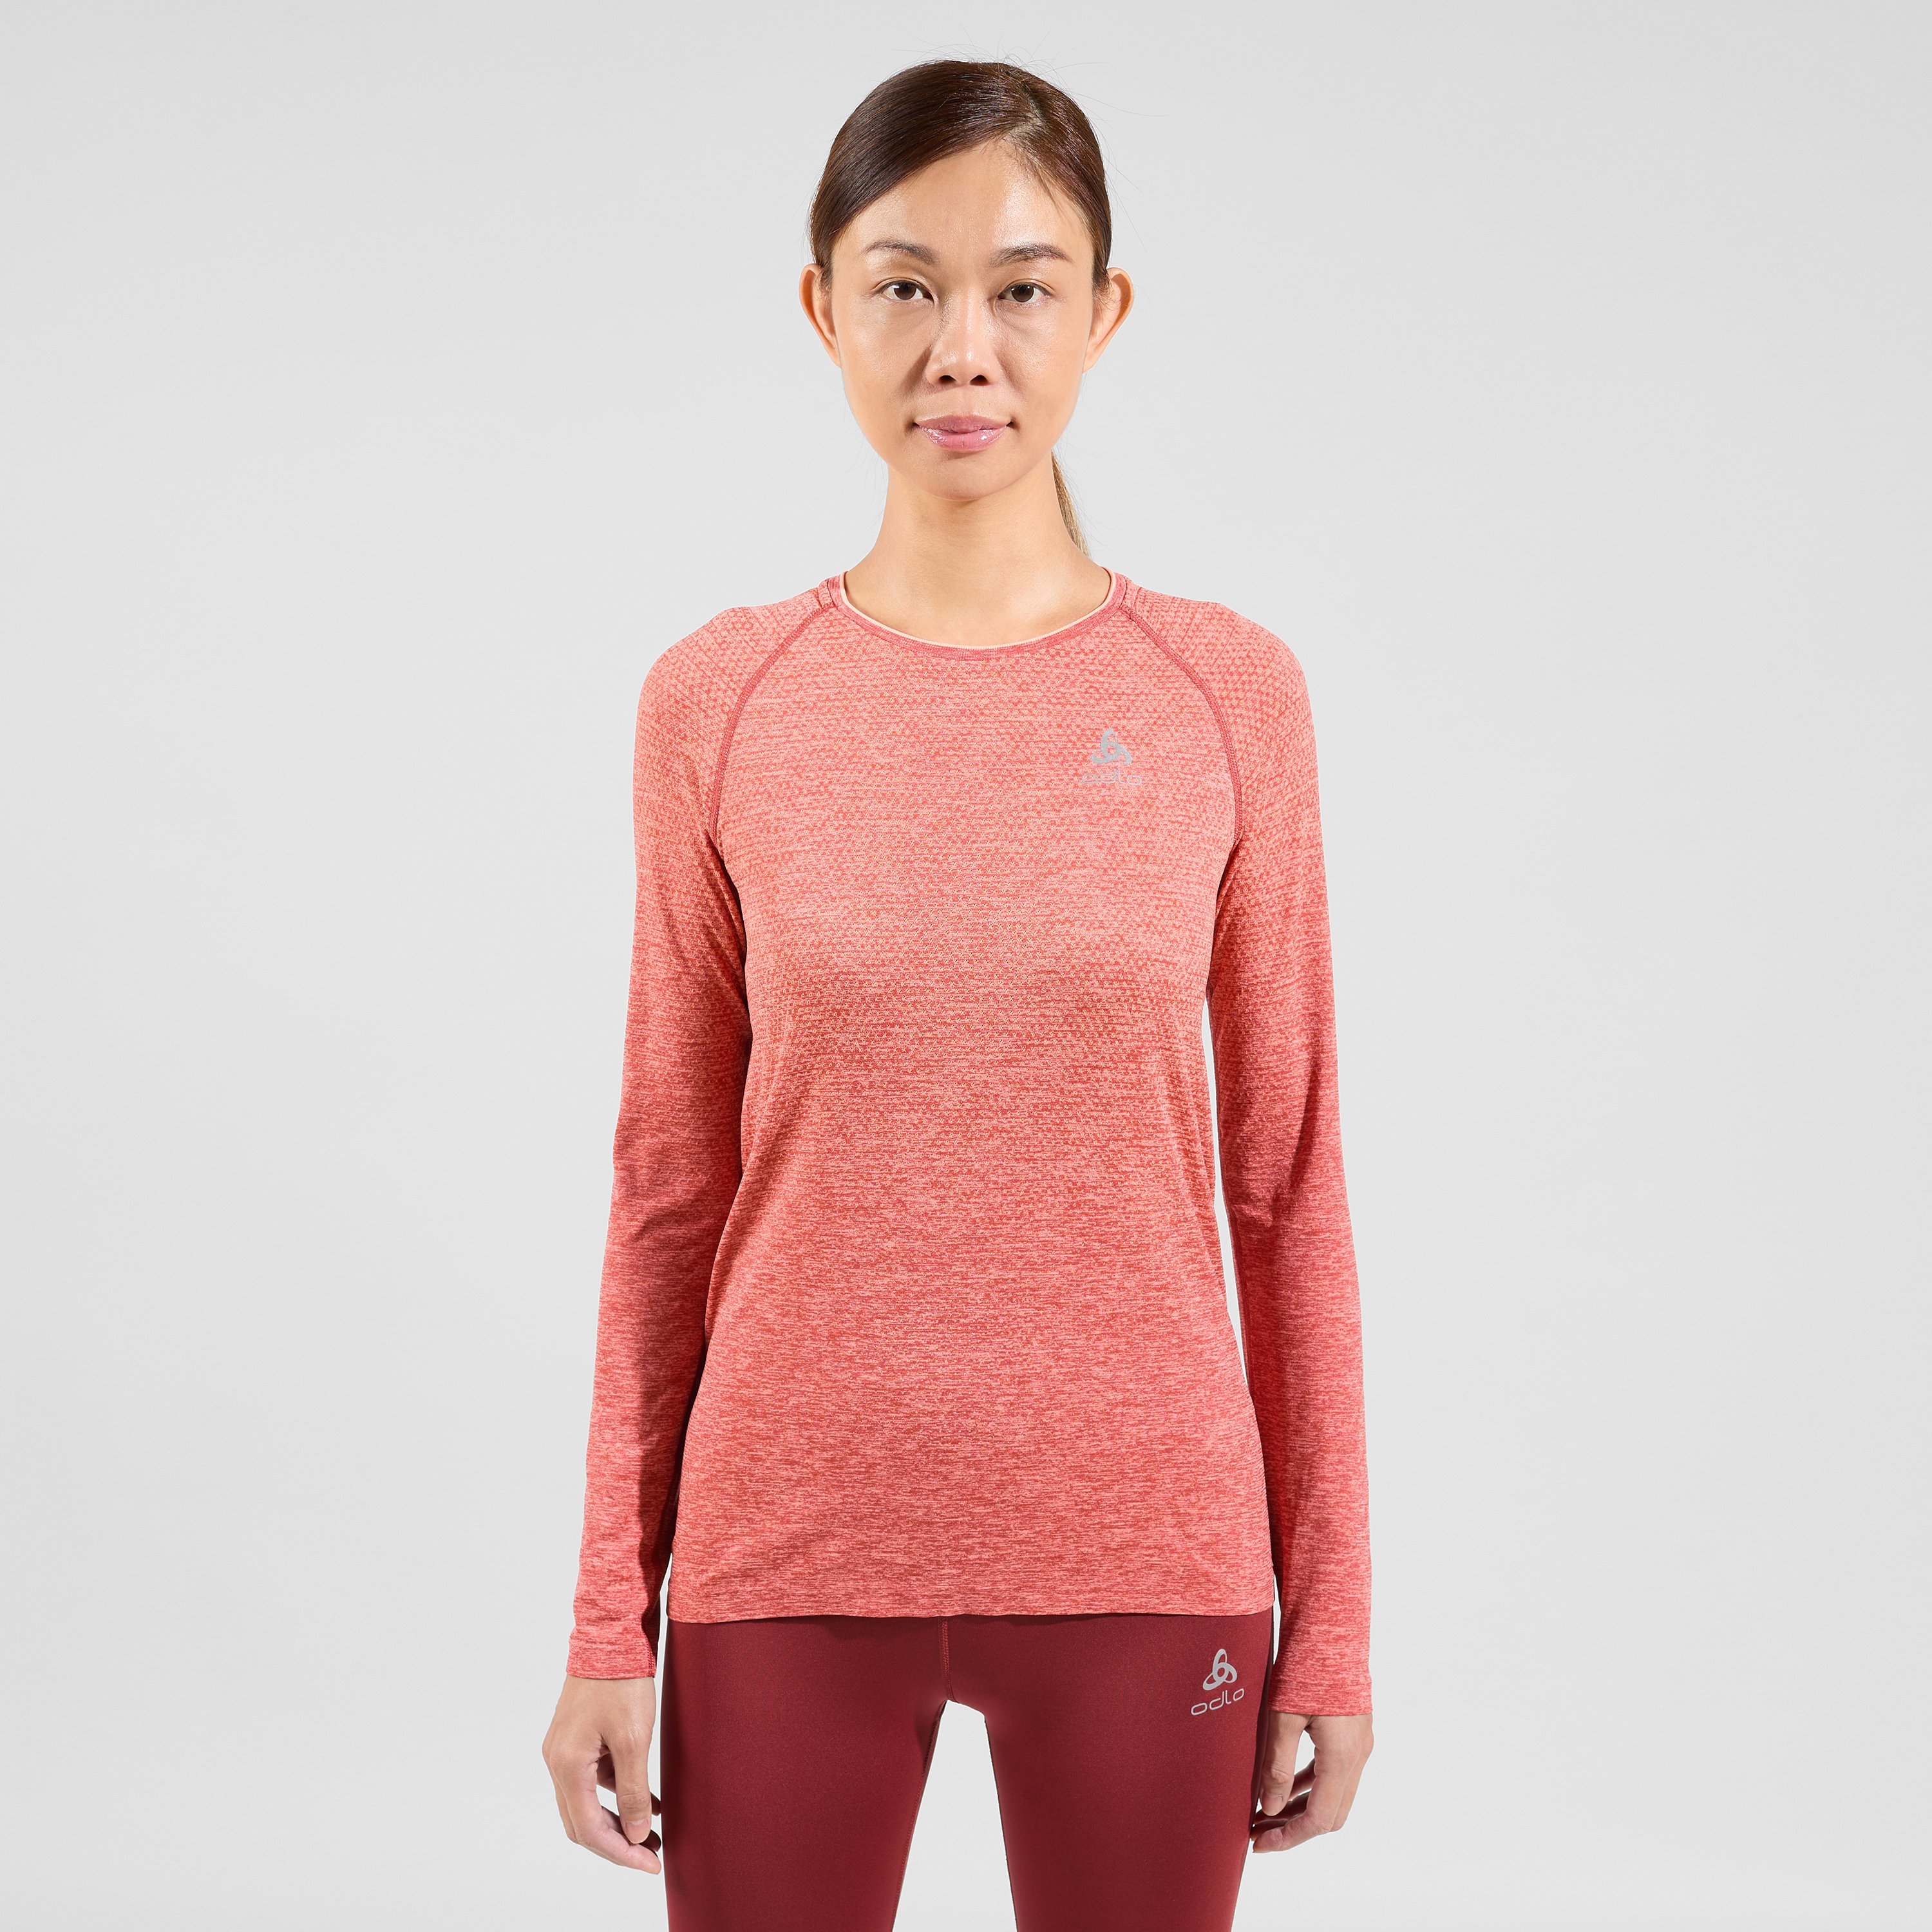 ODLO Essentials Seamless Langarm-Laufshirt für Damen, S, rot